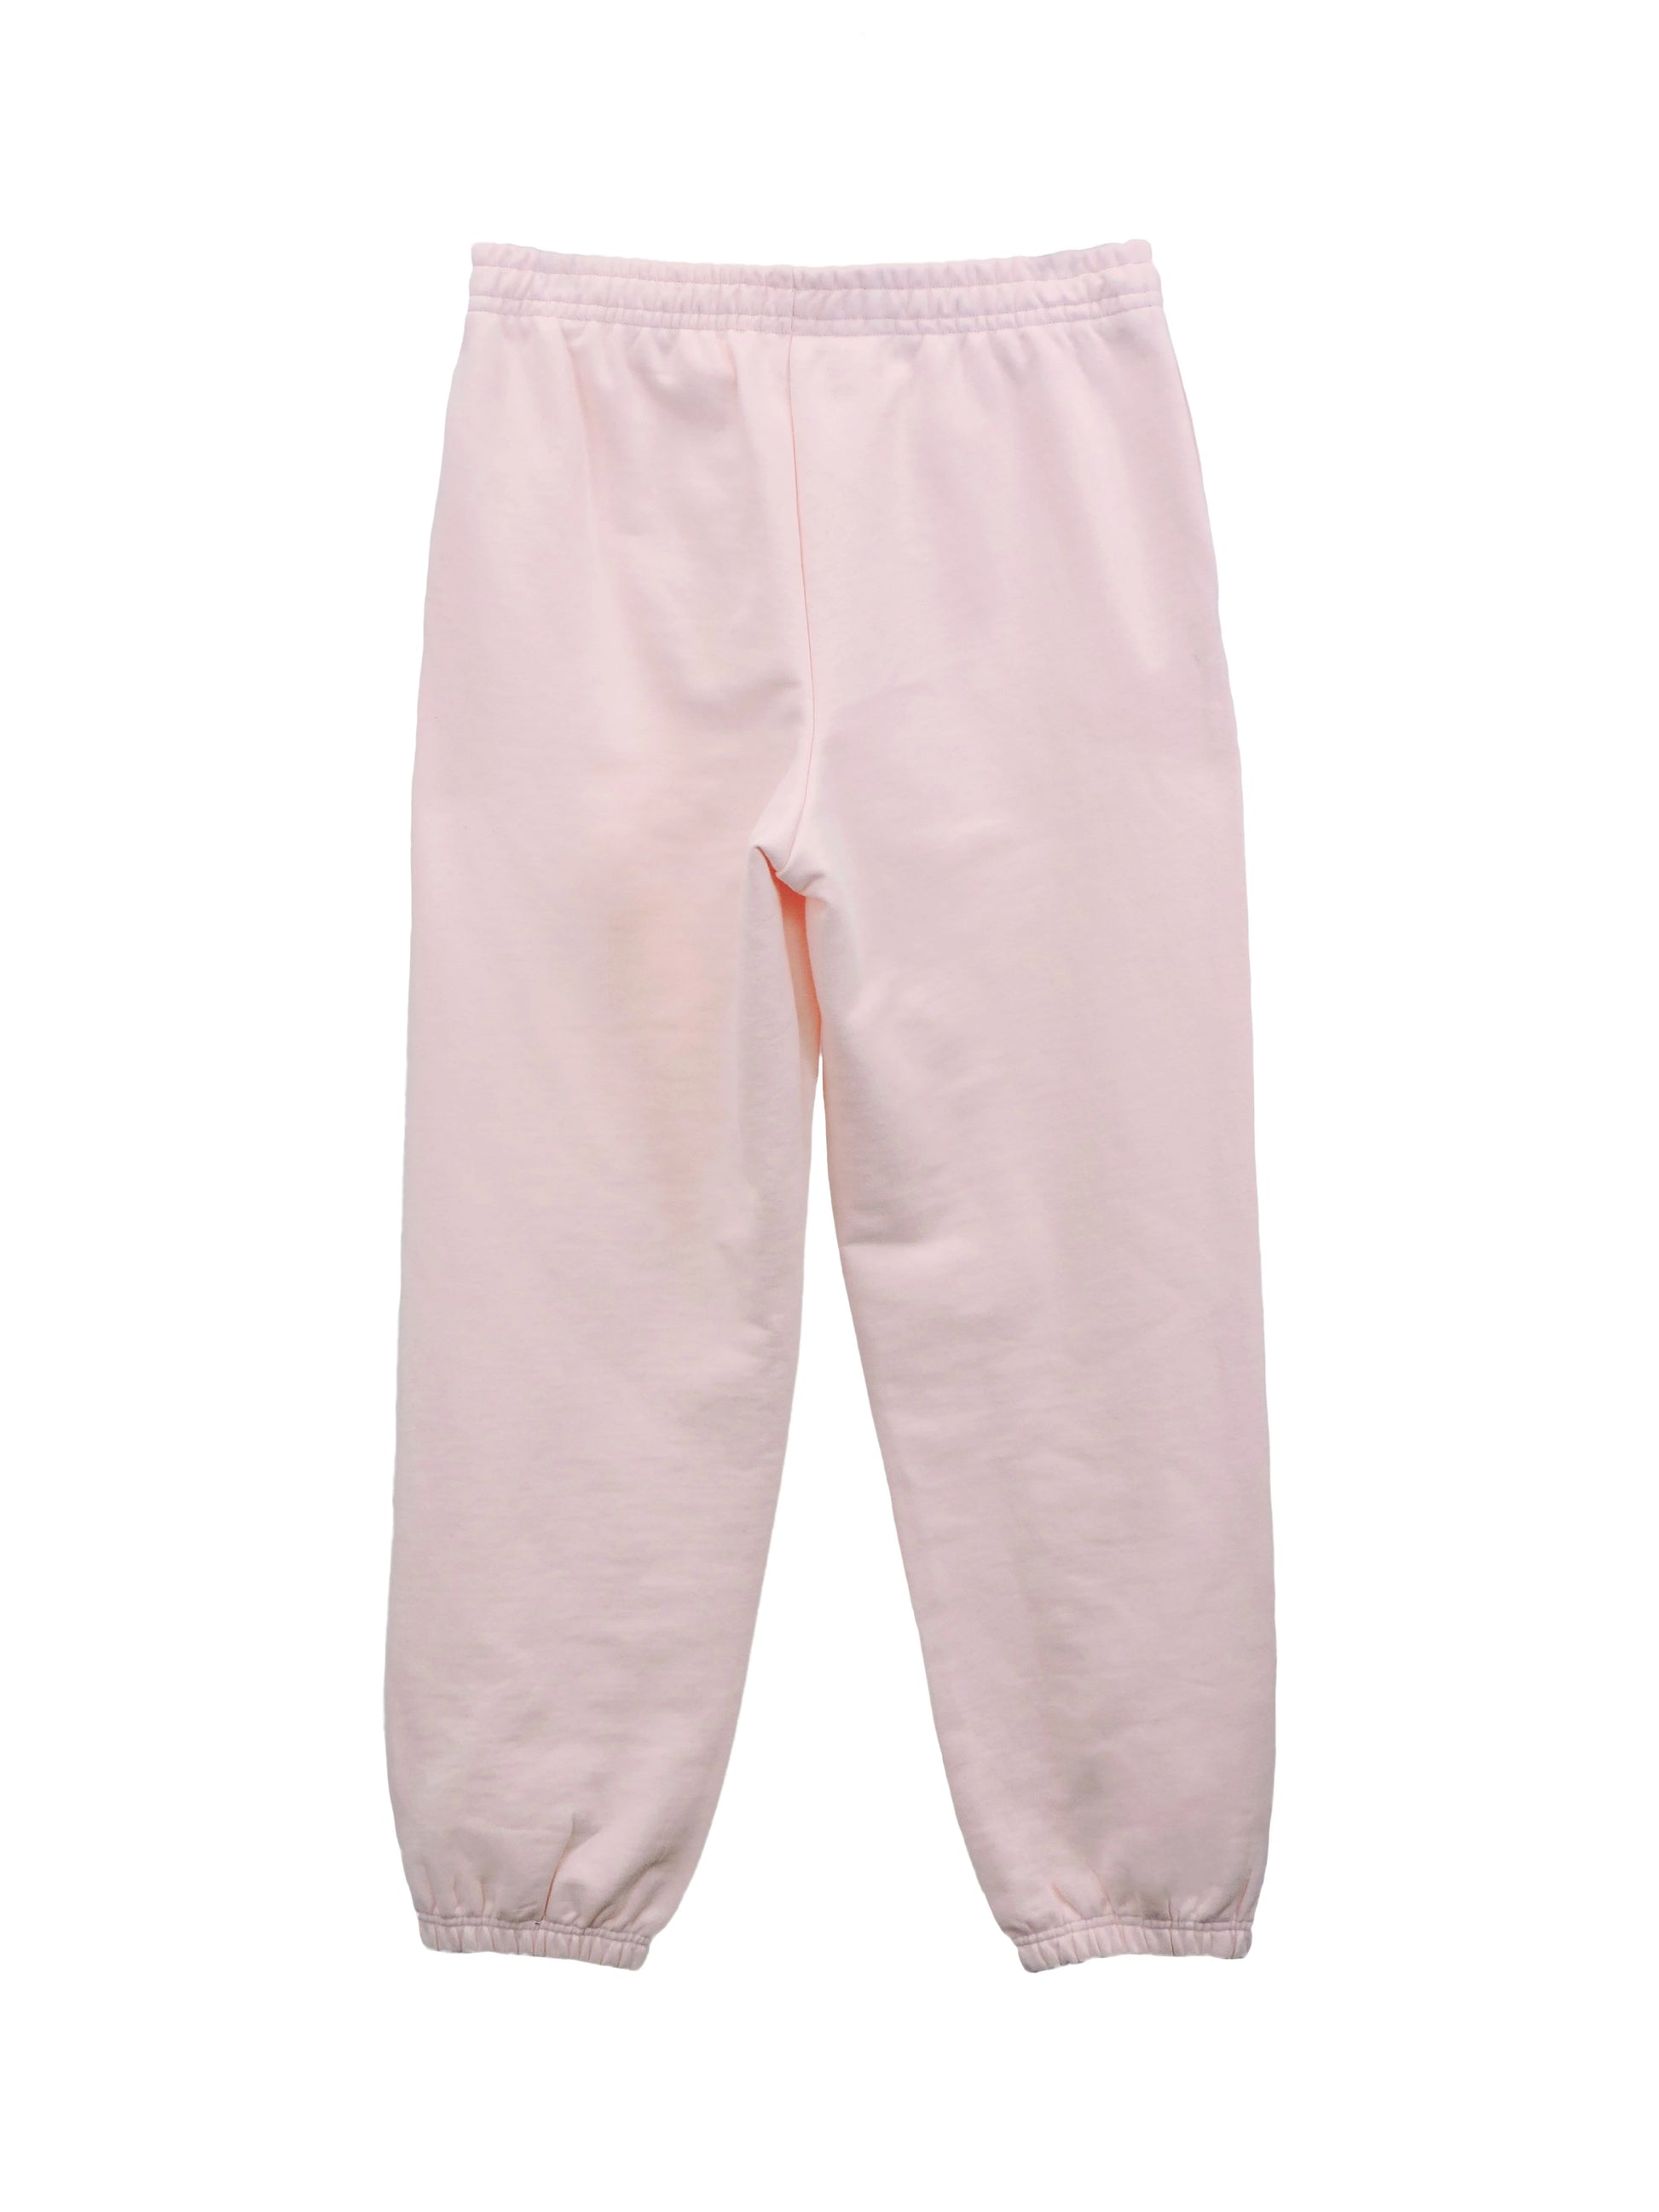 Back of Pale Pink Fleece Sweatpants